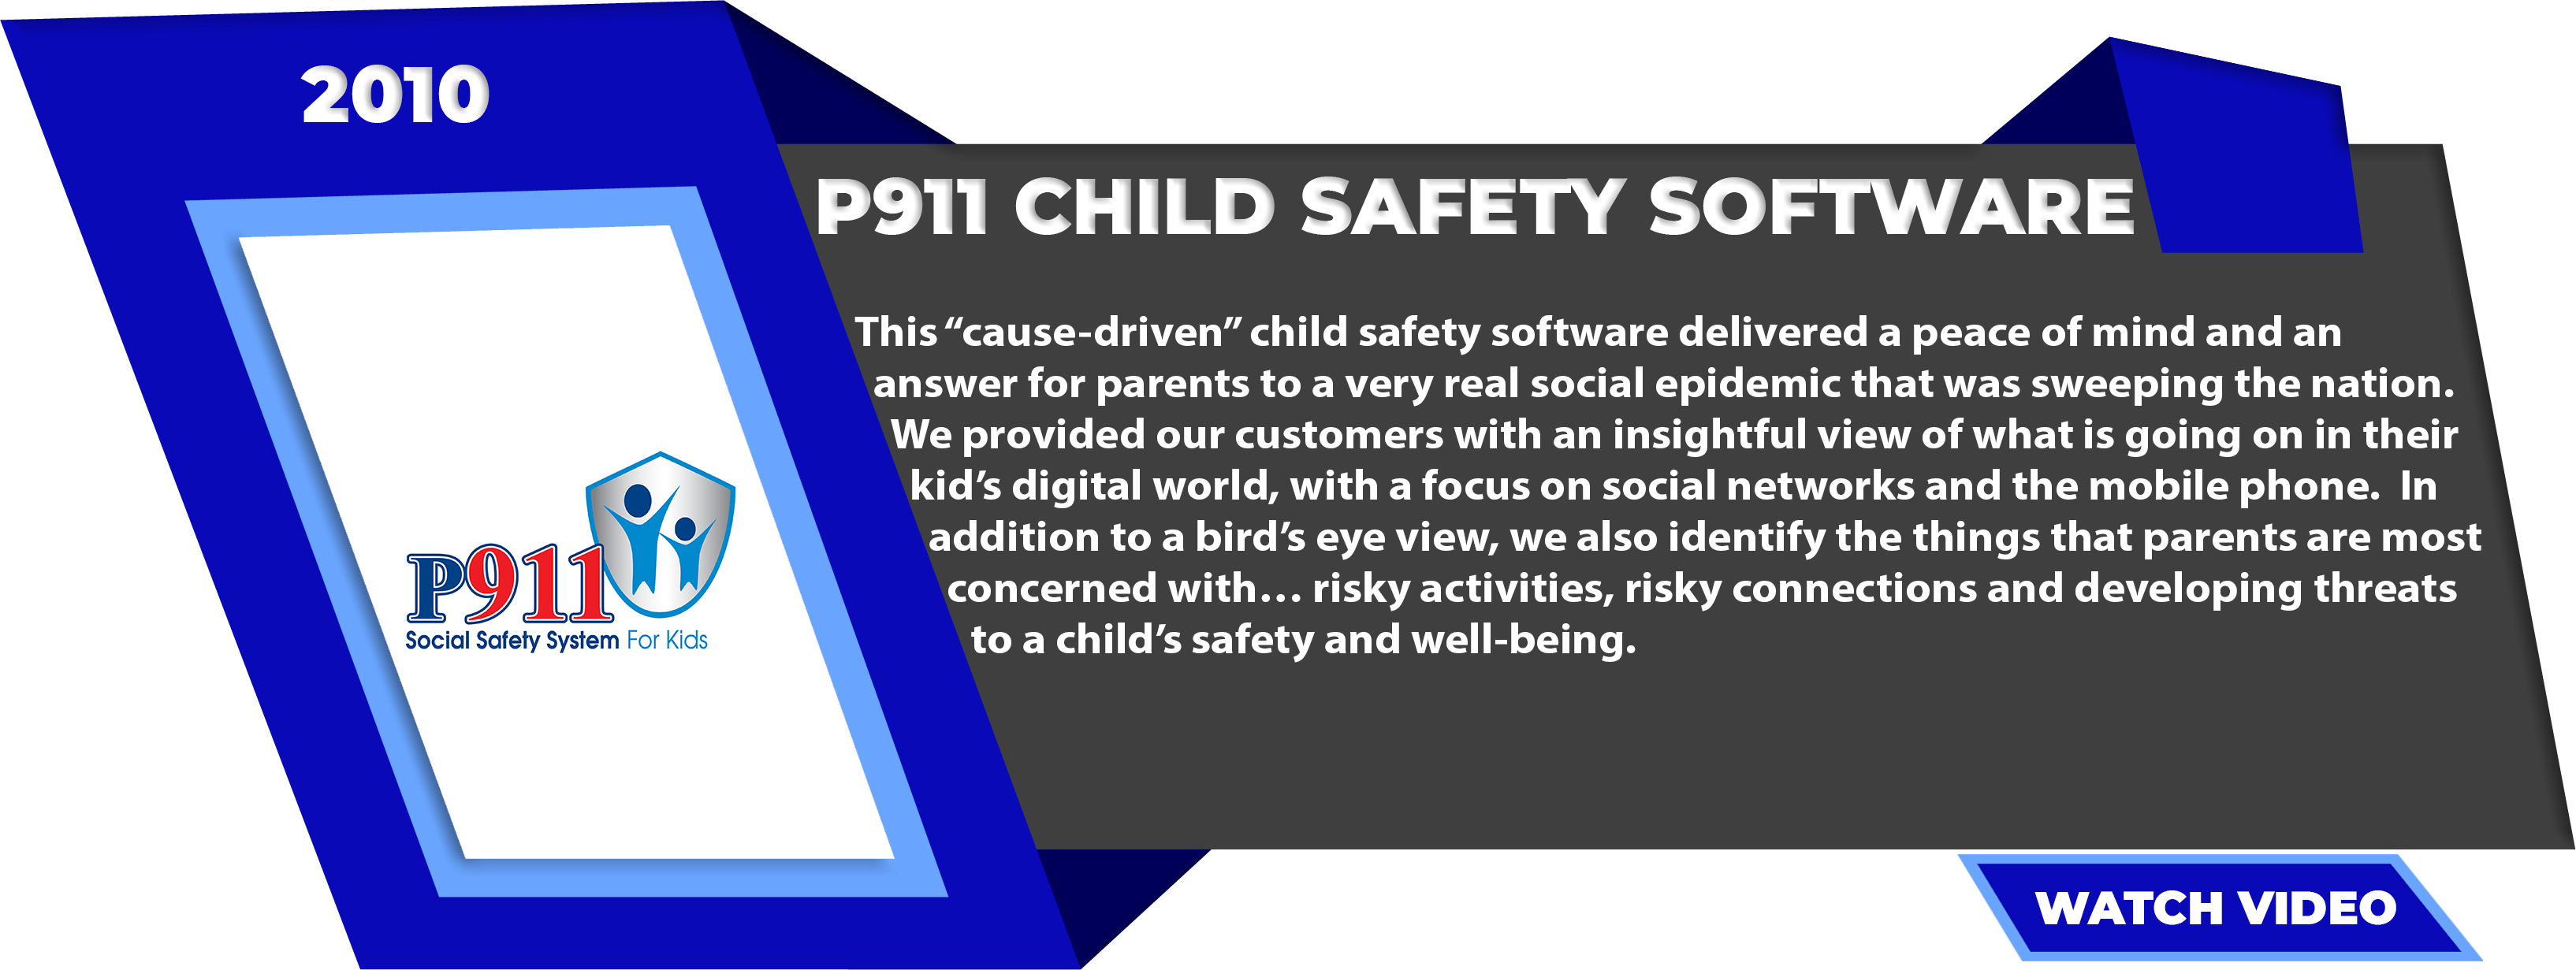 P911 Child Safety Software 2010 -2014